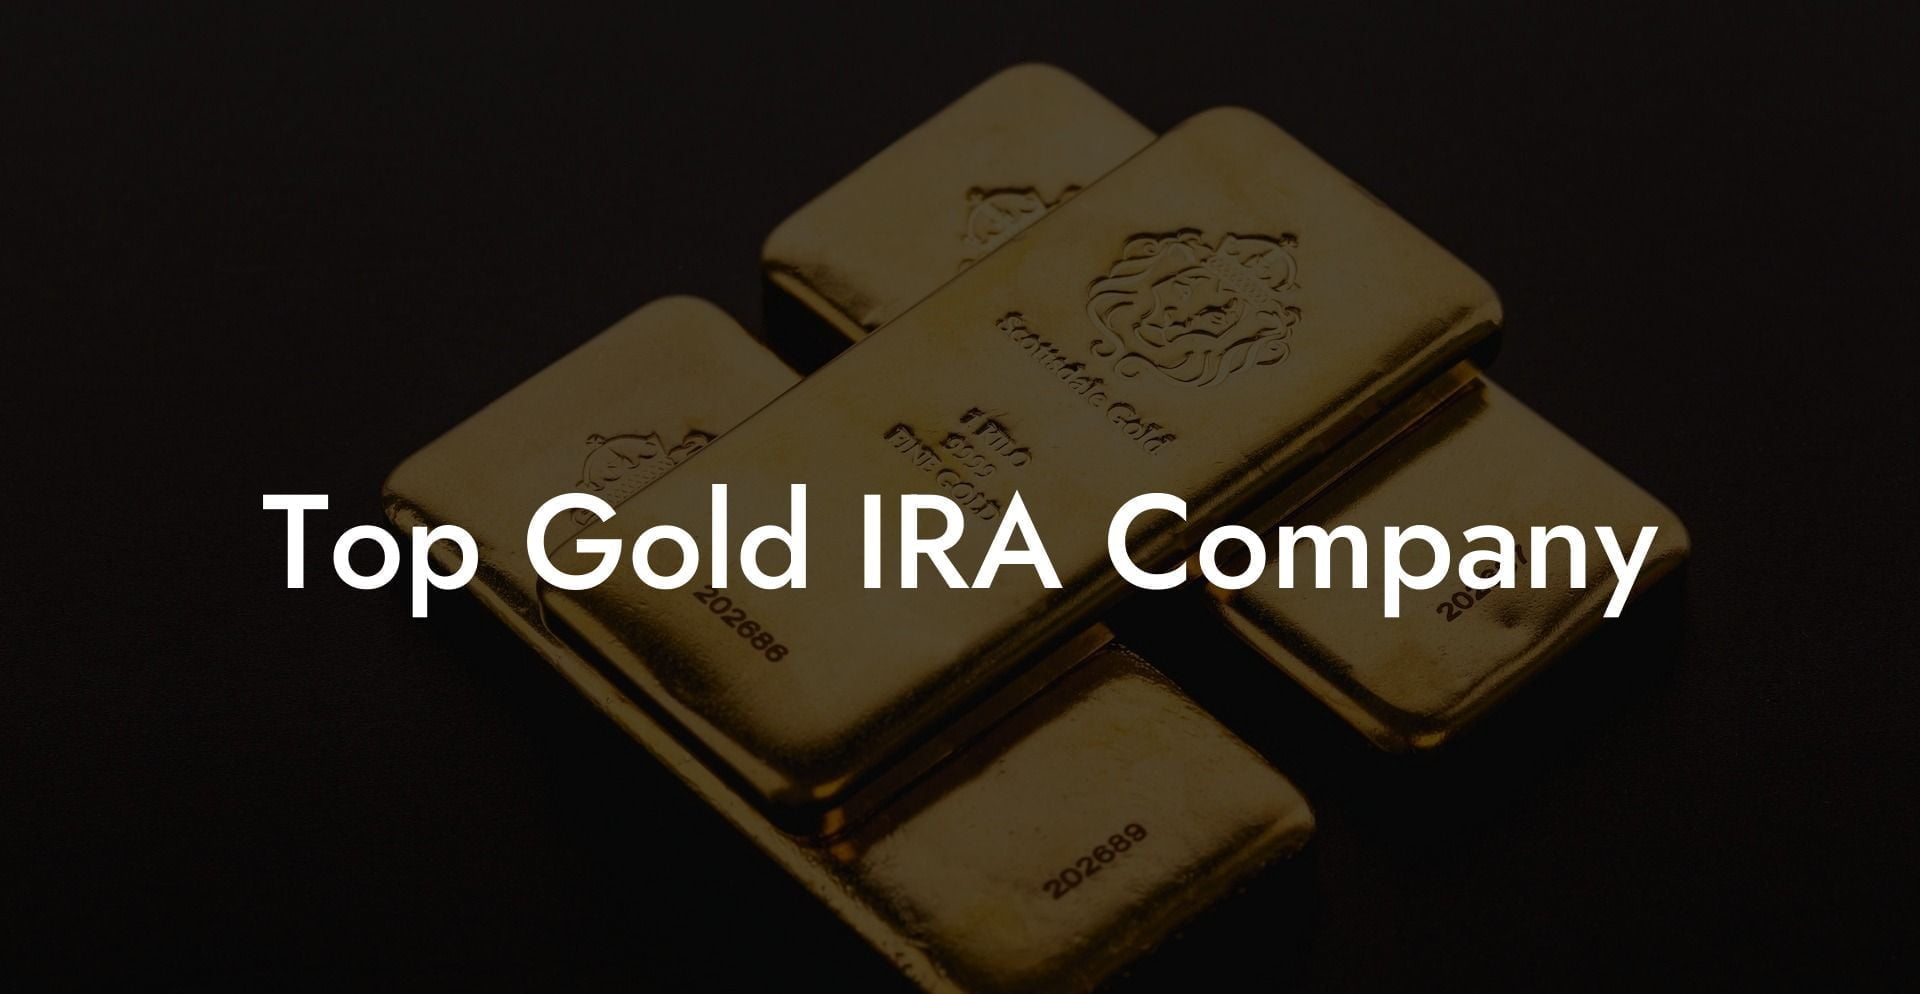 Top Gold IRA Company